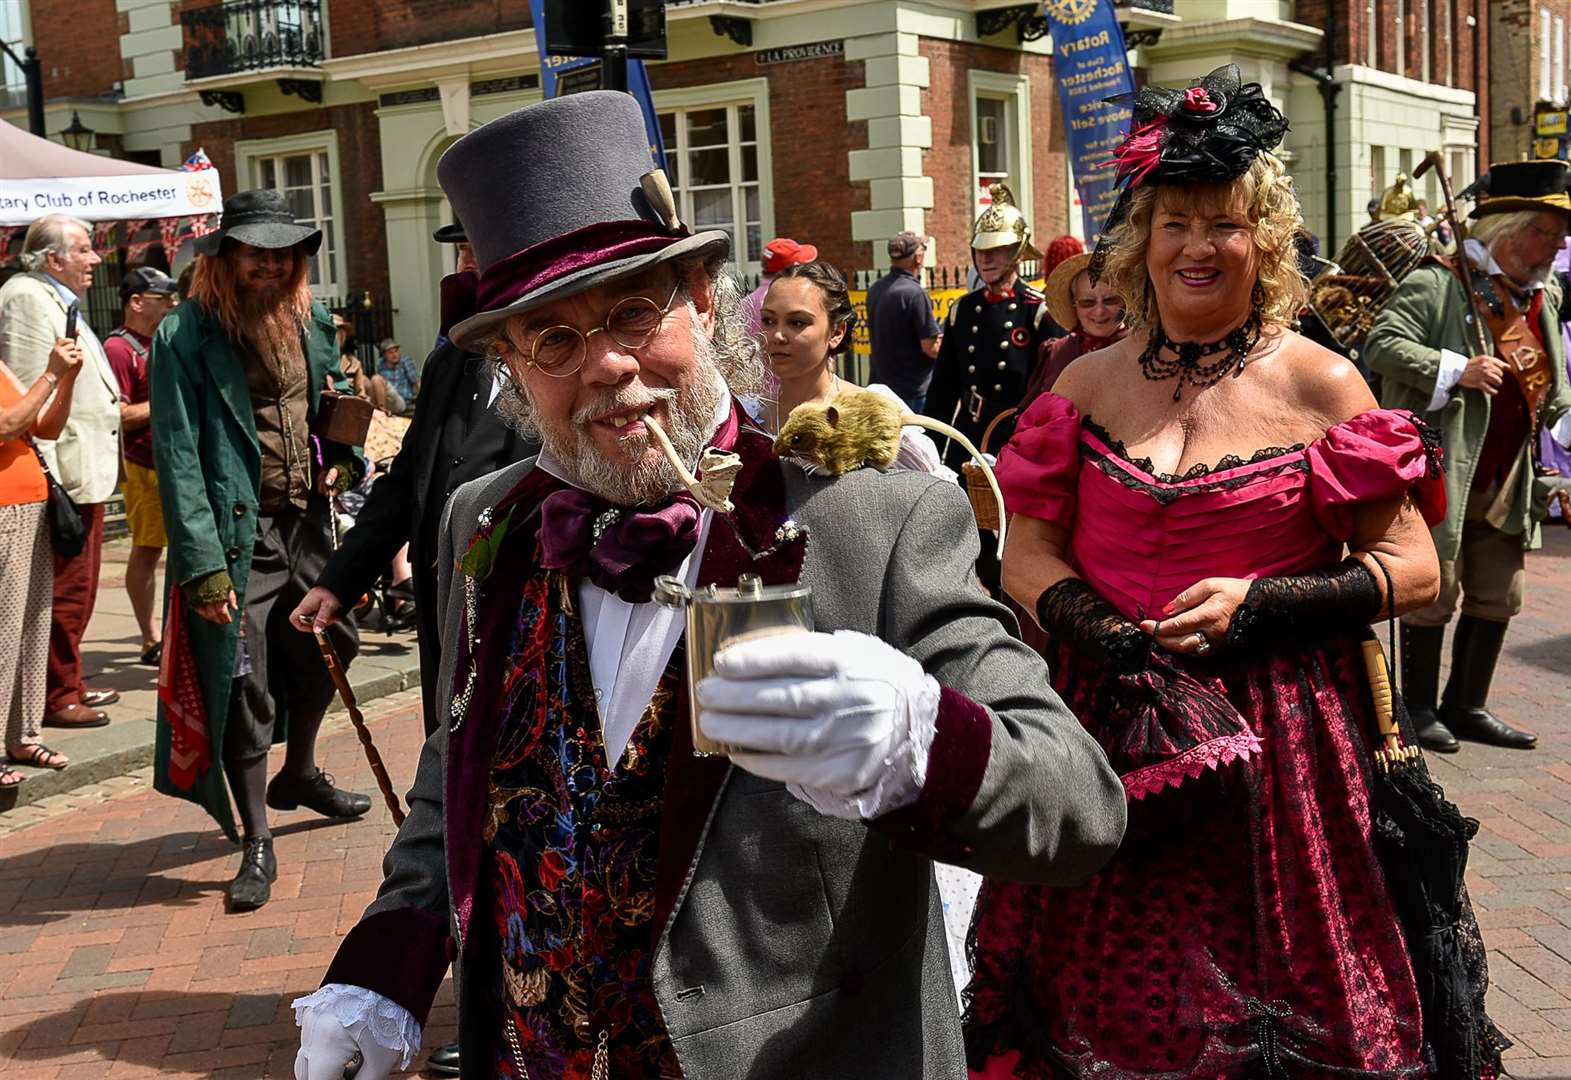 Dickens Festival in Rochester will also mark Queen's Platinum Jubilee